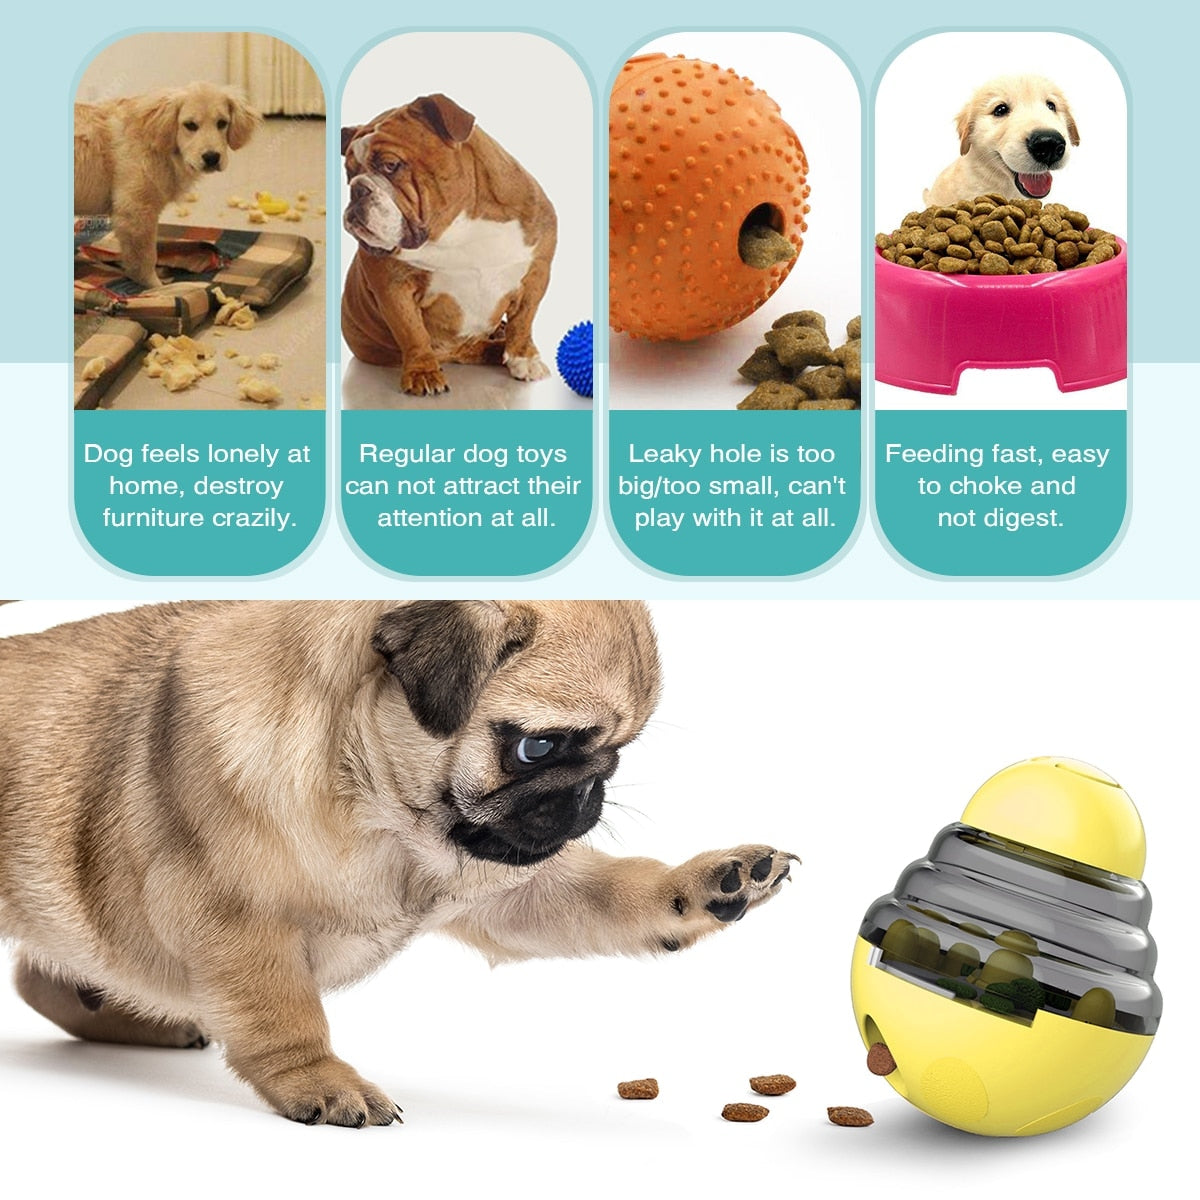 Large Pet Dog IQ Interactive Tumbler Food Dispenser Feeder Puzzle Treat  Ball Toy